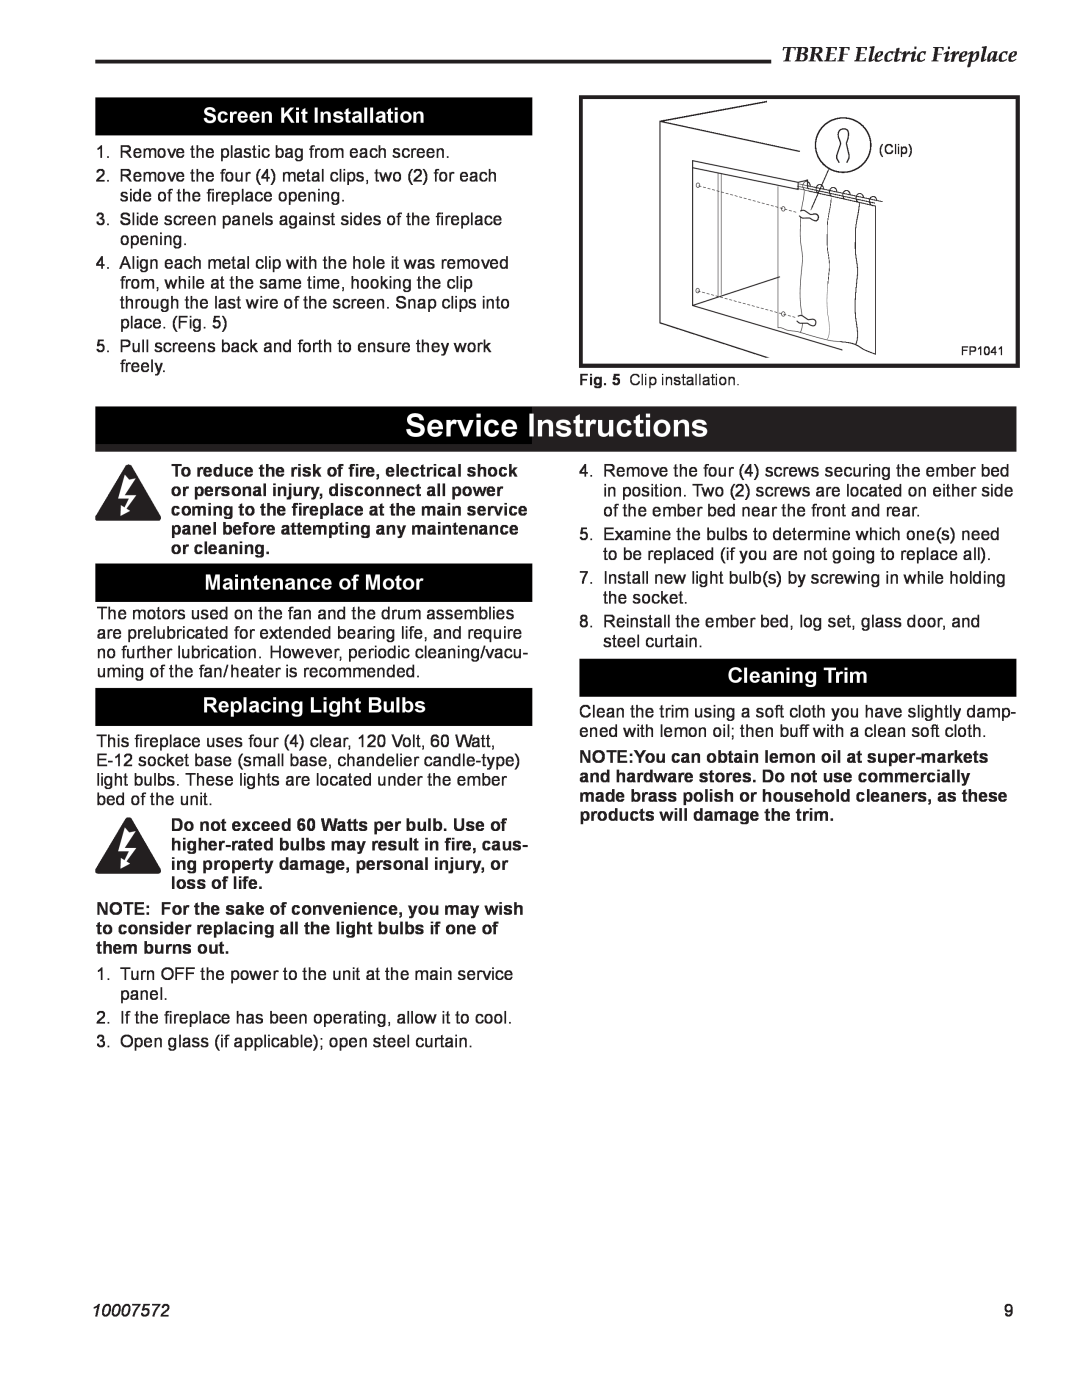 Vermont Casting TBREF36 manual Service Instructions, Screen Kit Installation, Maintenance of Motor, Replacing Light Bulbs 